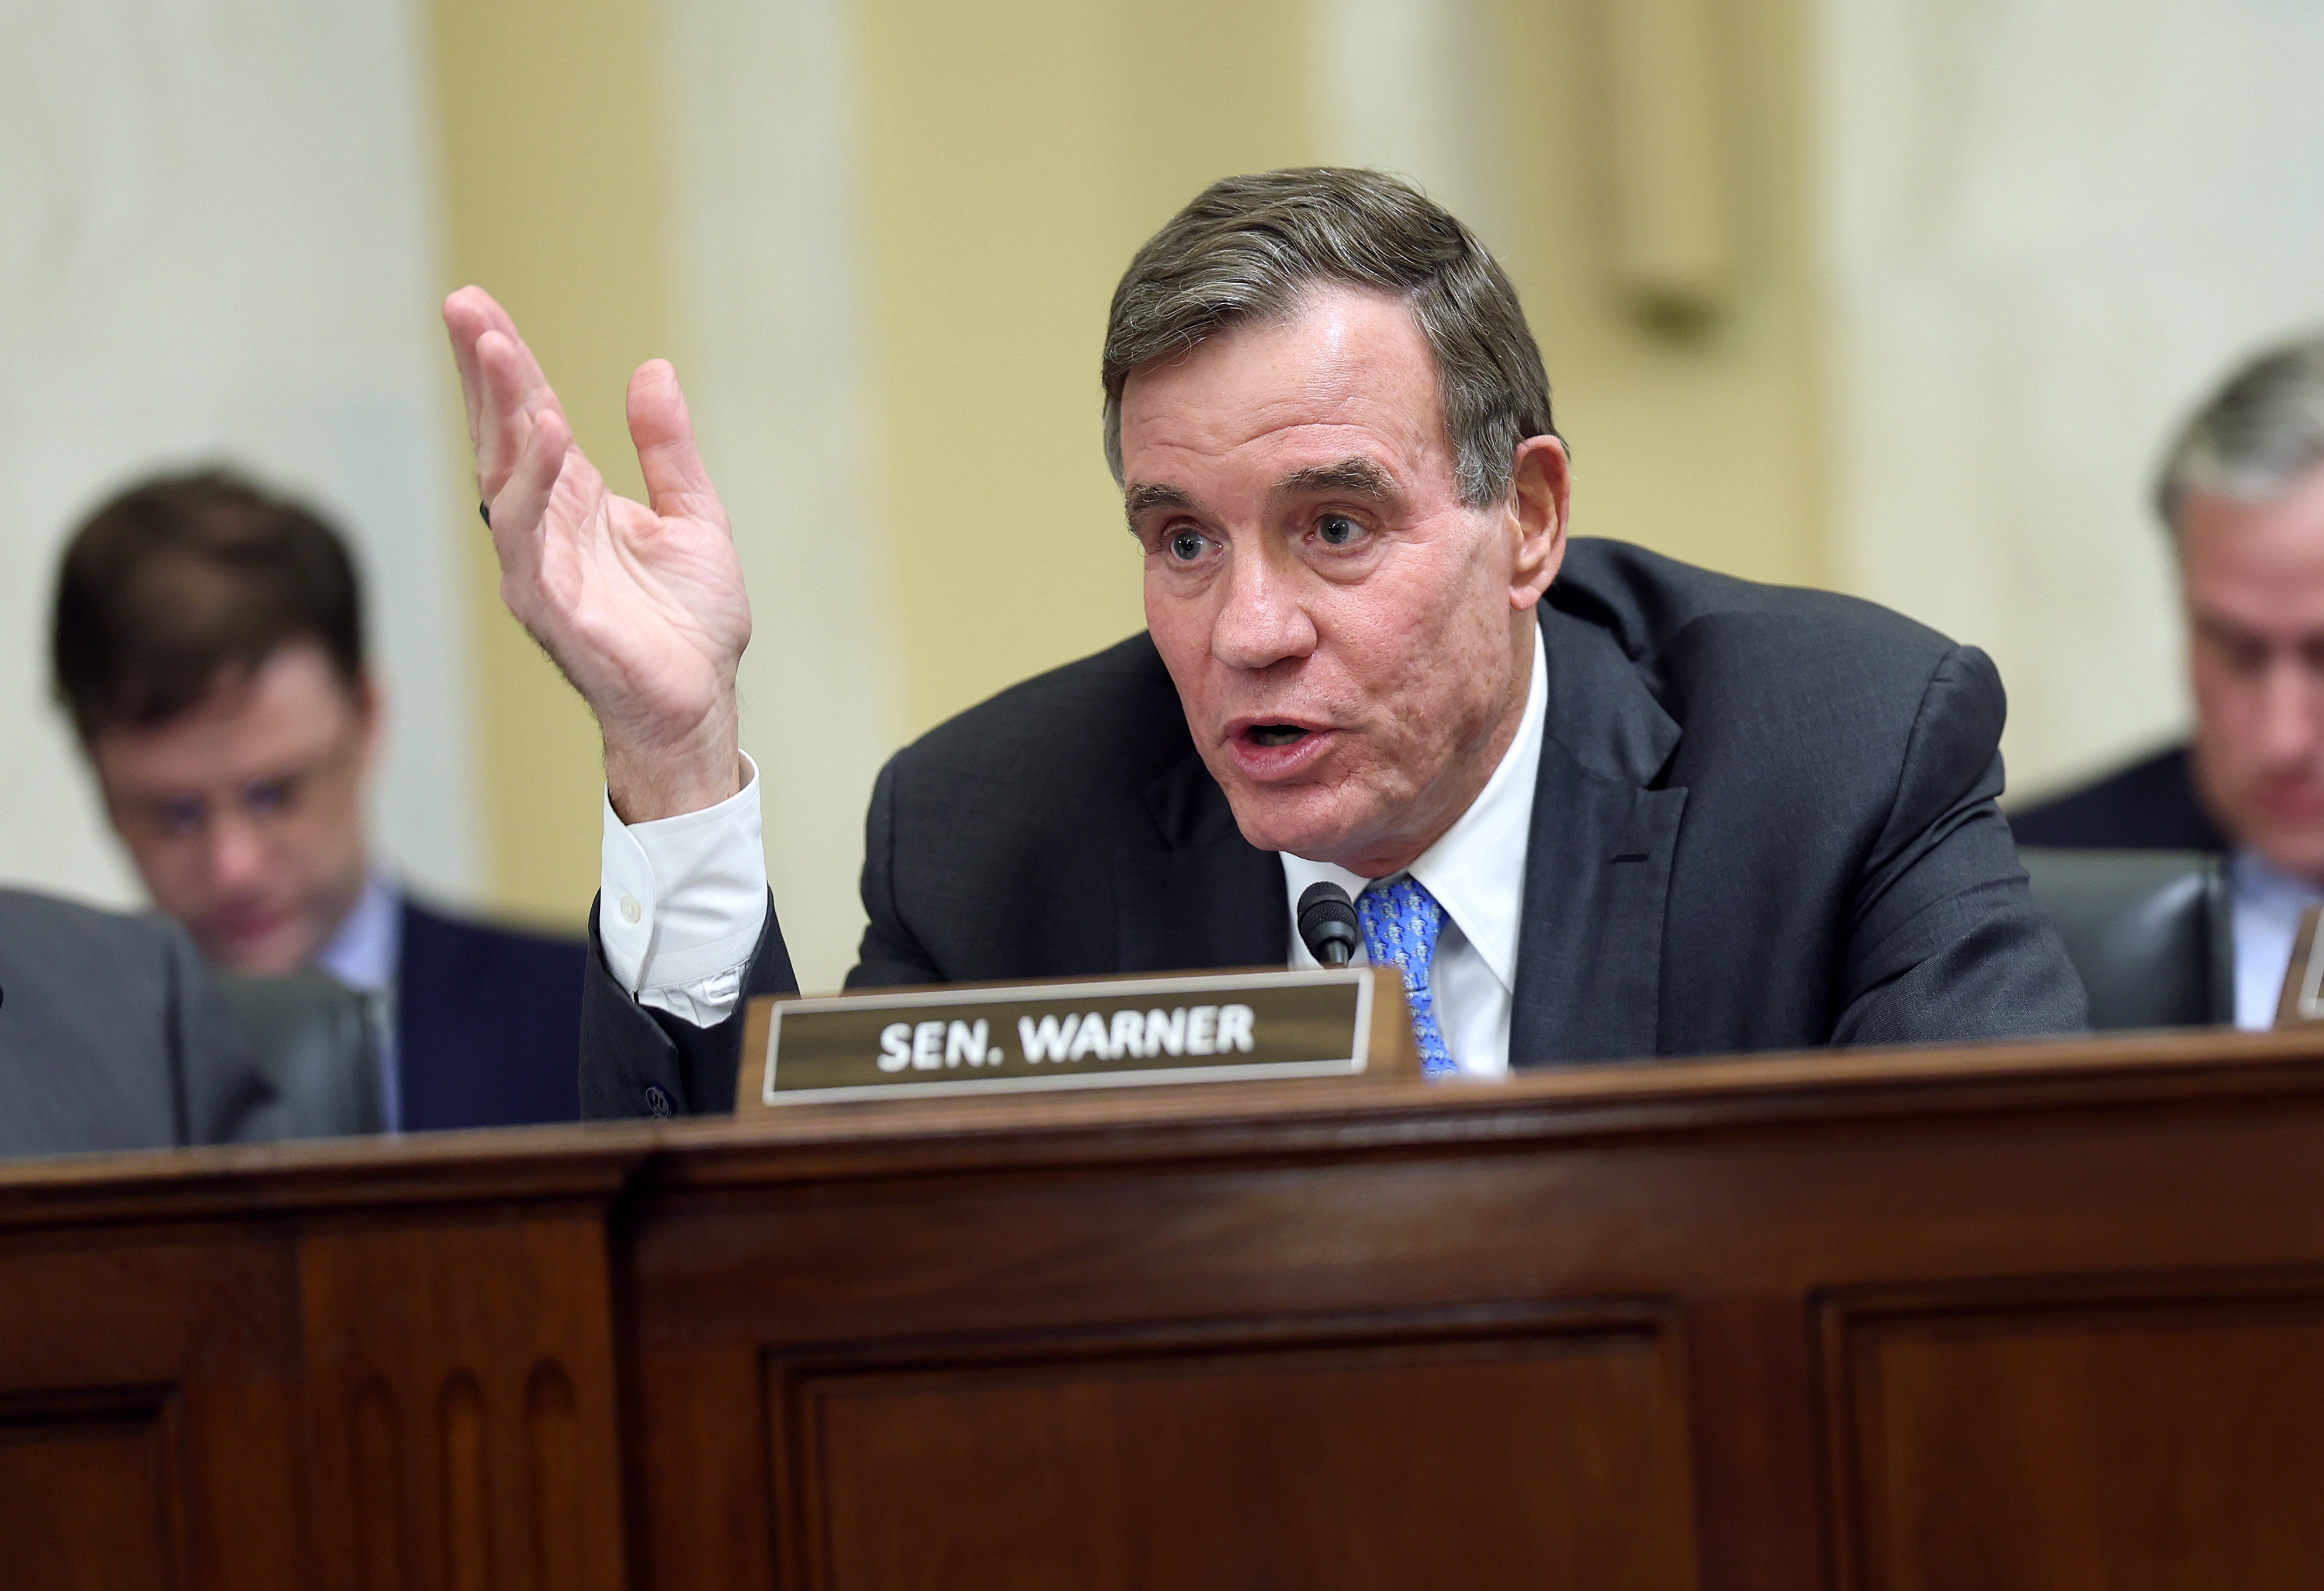 Mark Warner chairs the US senate intelligence committee